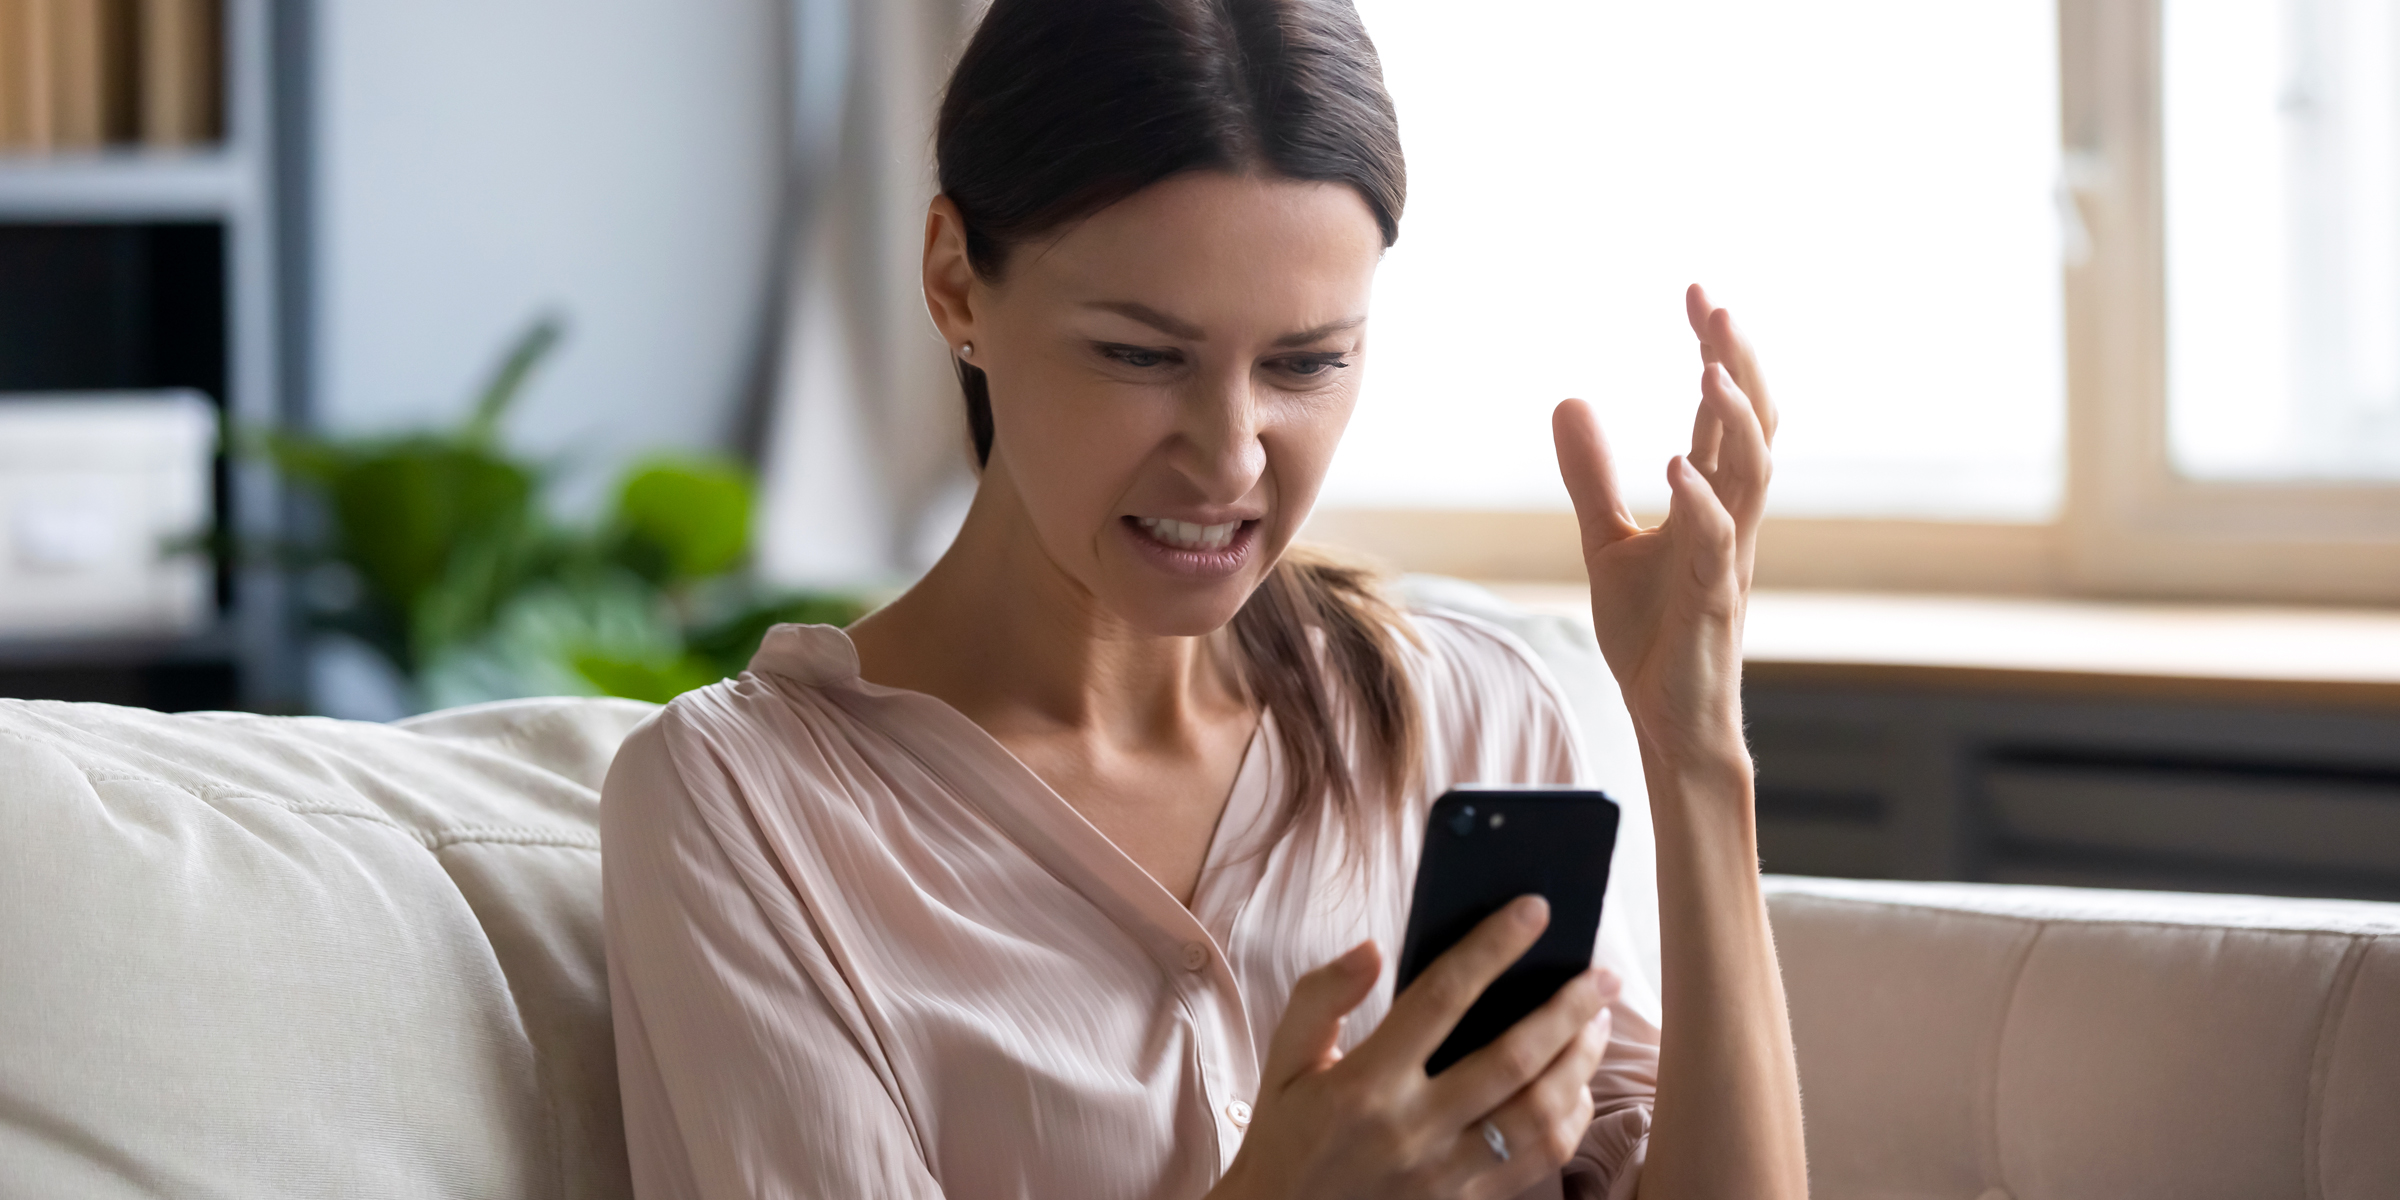 Femme en colère avec un smartphone | Source : Shutterstock